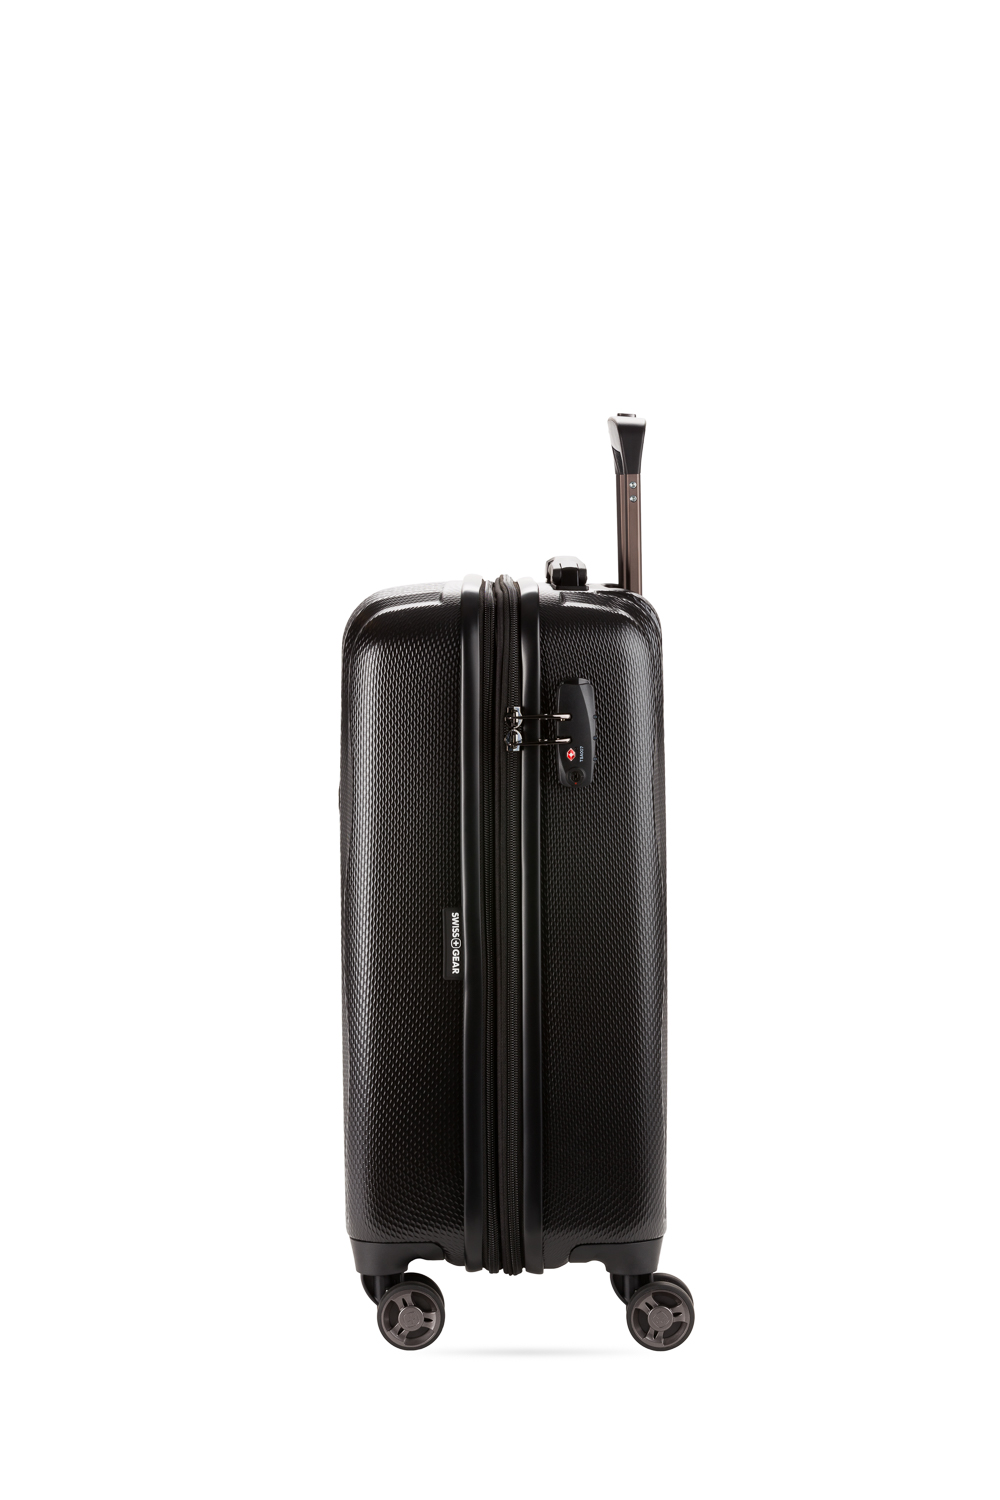 SwissGear 7272 Energie Hardside Luggage Carry-On Luggage With Spinner  Wheels ＆ TSA Lock, Black, 19並行輸入